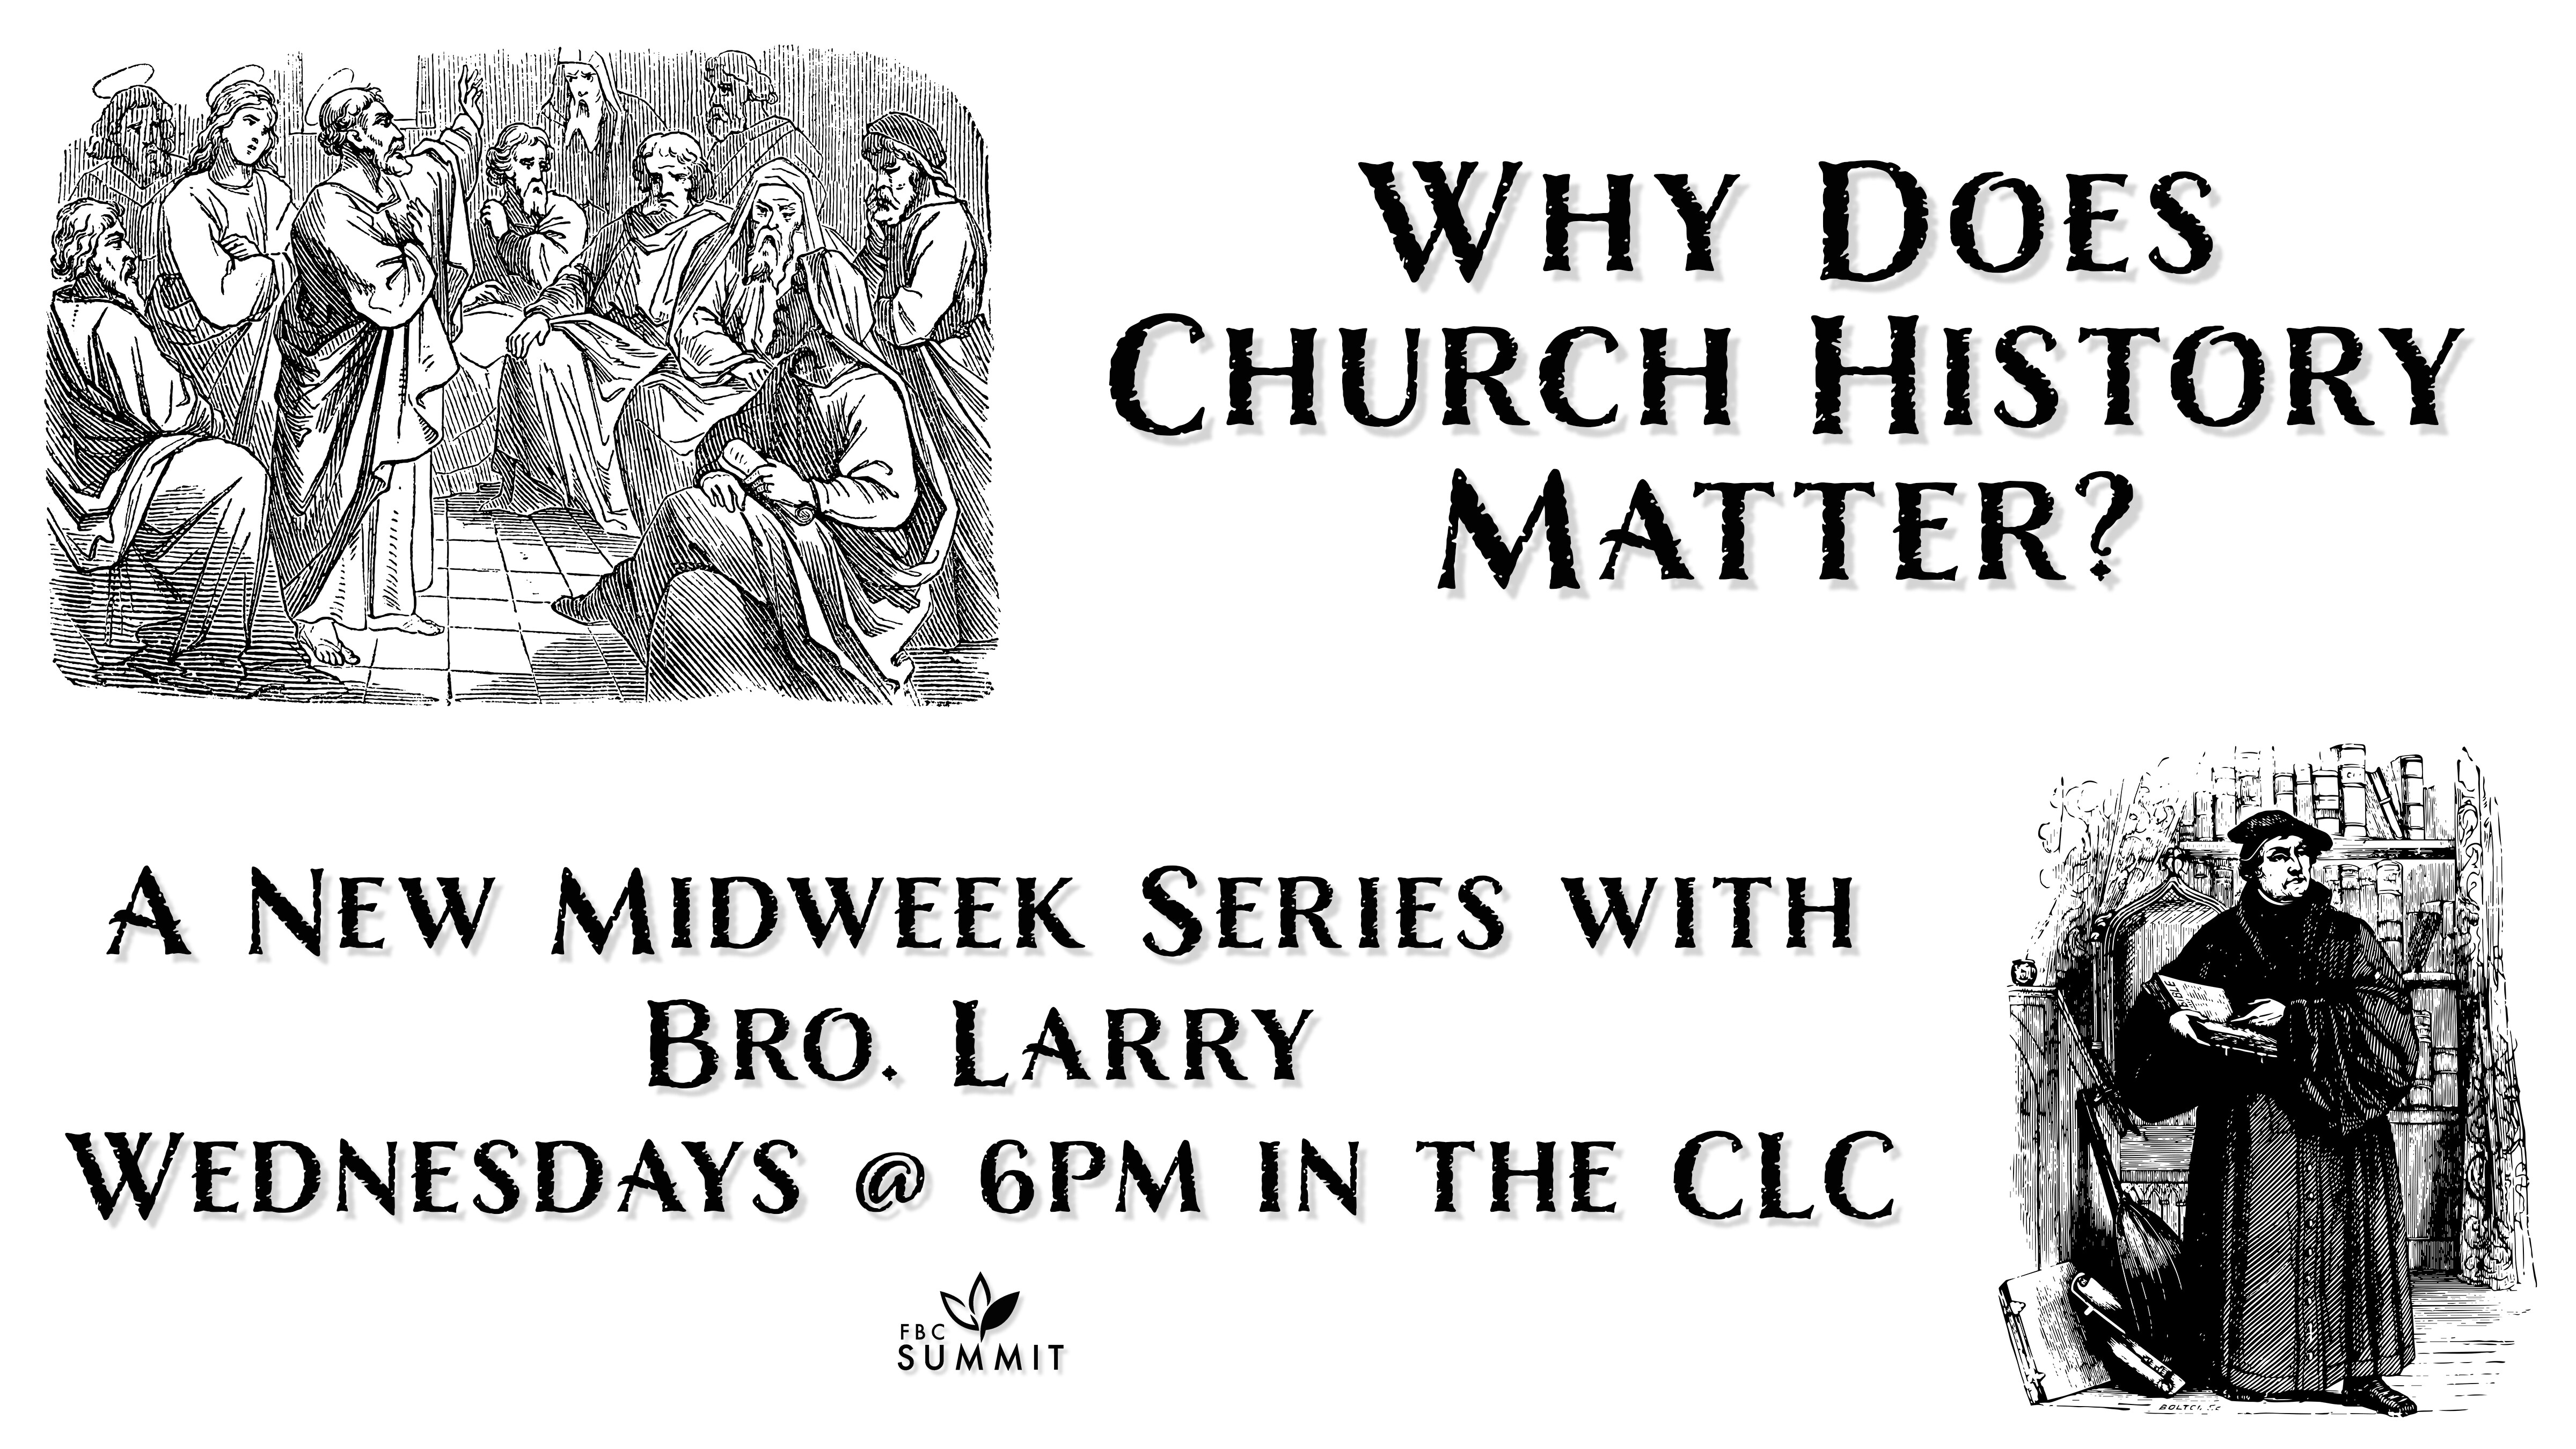 Midweek Bible Study: "Church History 101: The 13th & 14th Centuries" // Dr. Larry LeBlanc